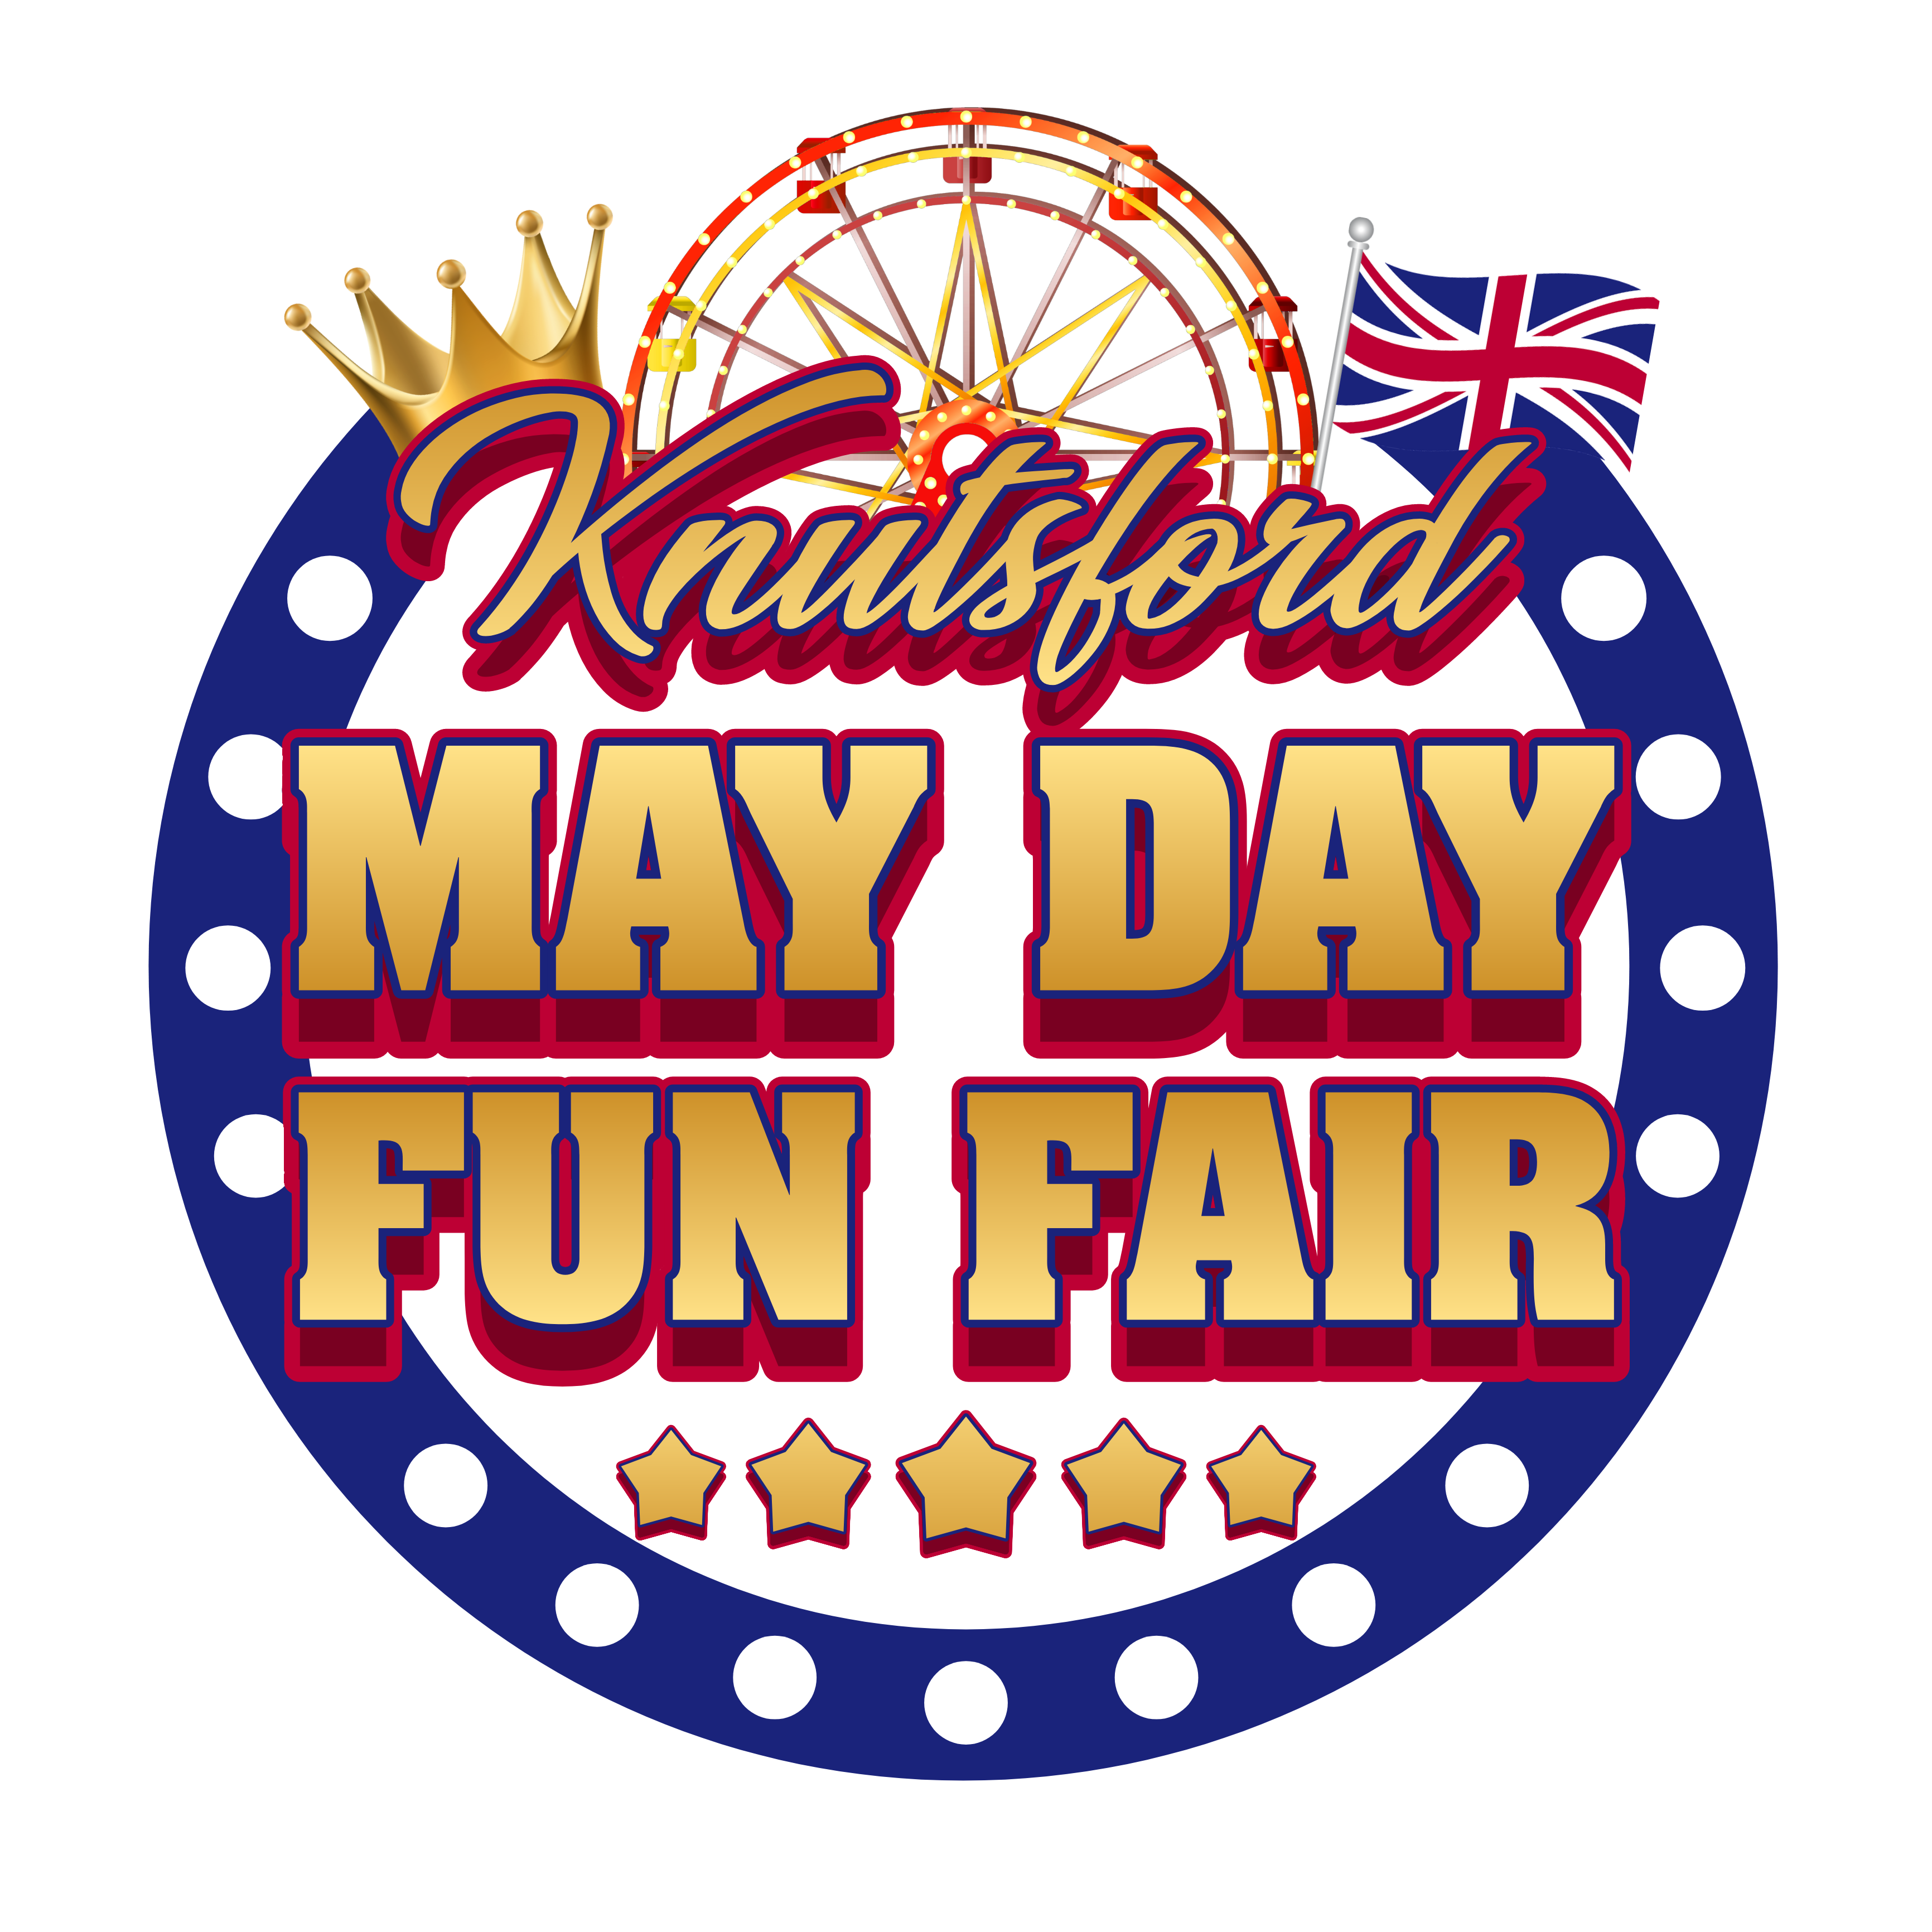 poster advertising Knutsford September Fun Fair